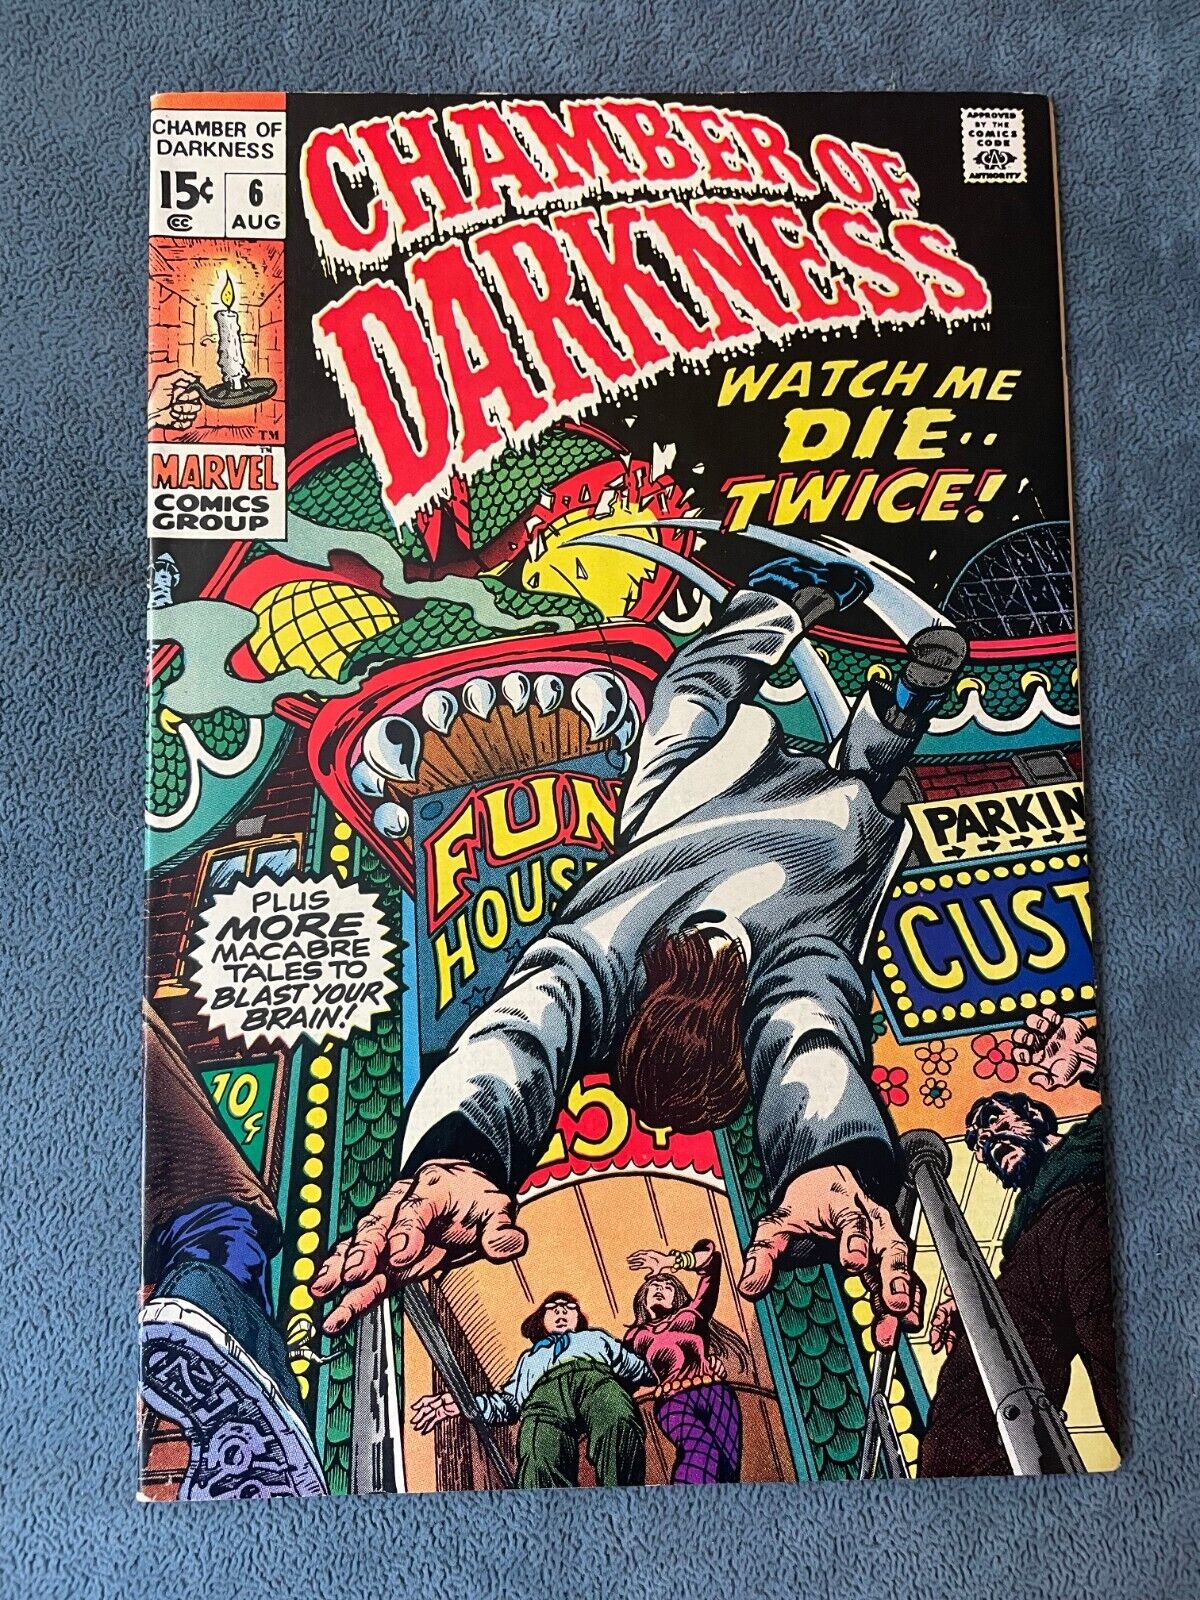 Chamber of Darkness #6 1970 Marvel Comic Book Horror High Grade VF+